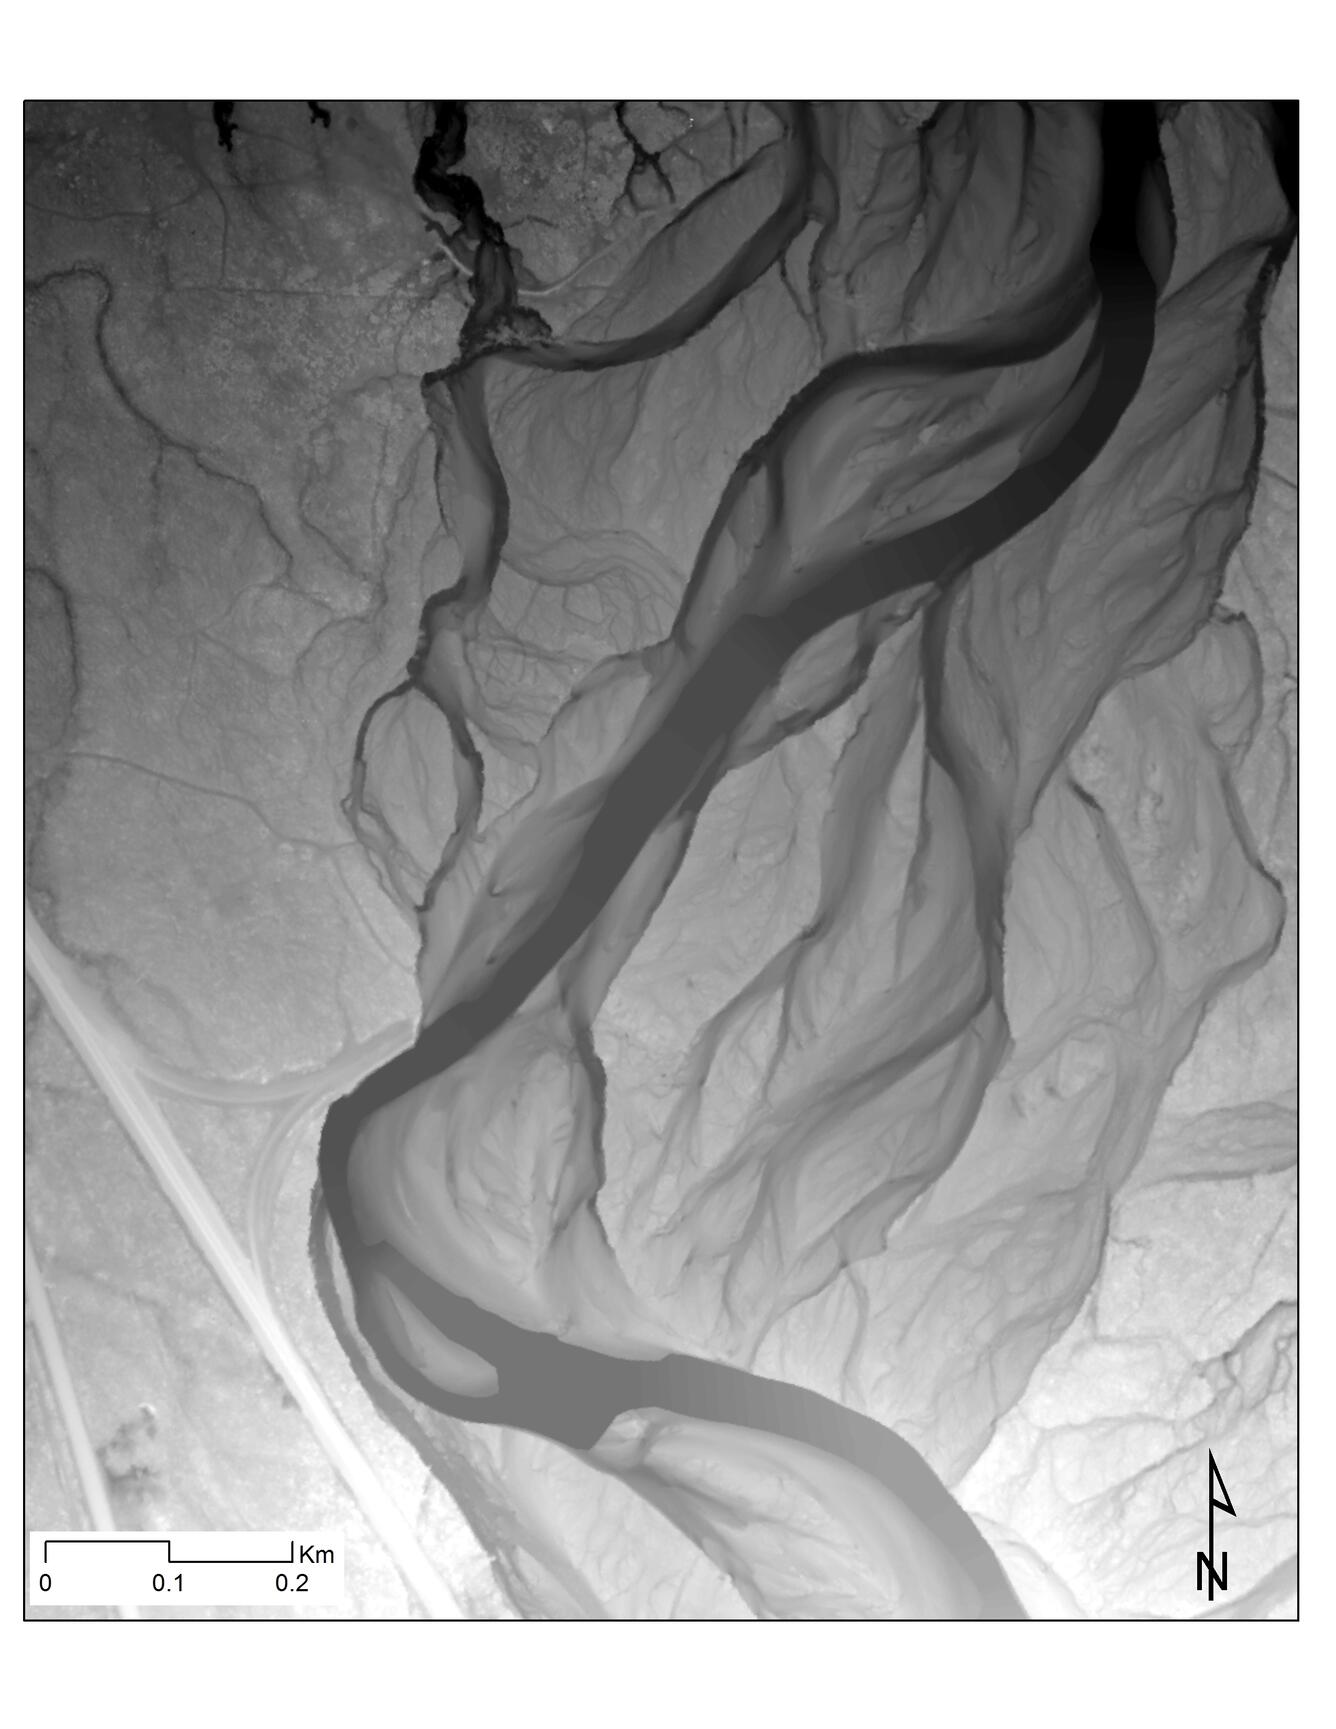 Digital Elevation model of the Nyack Floodplain on the Middle Fork Flathead River, Montana